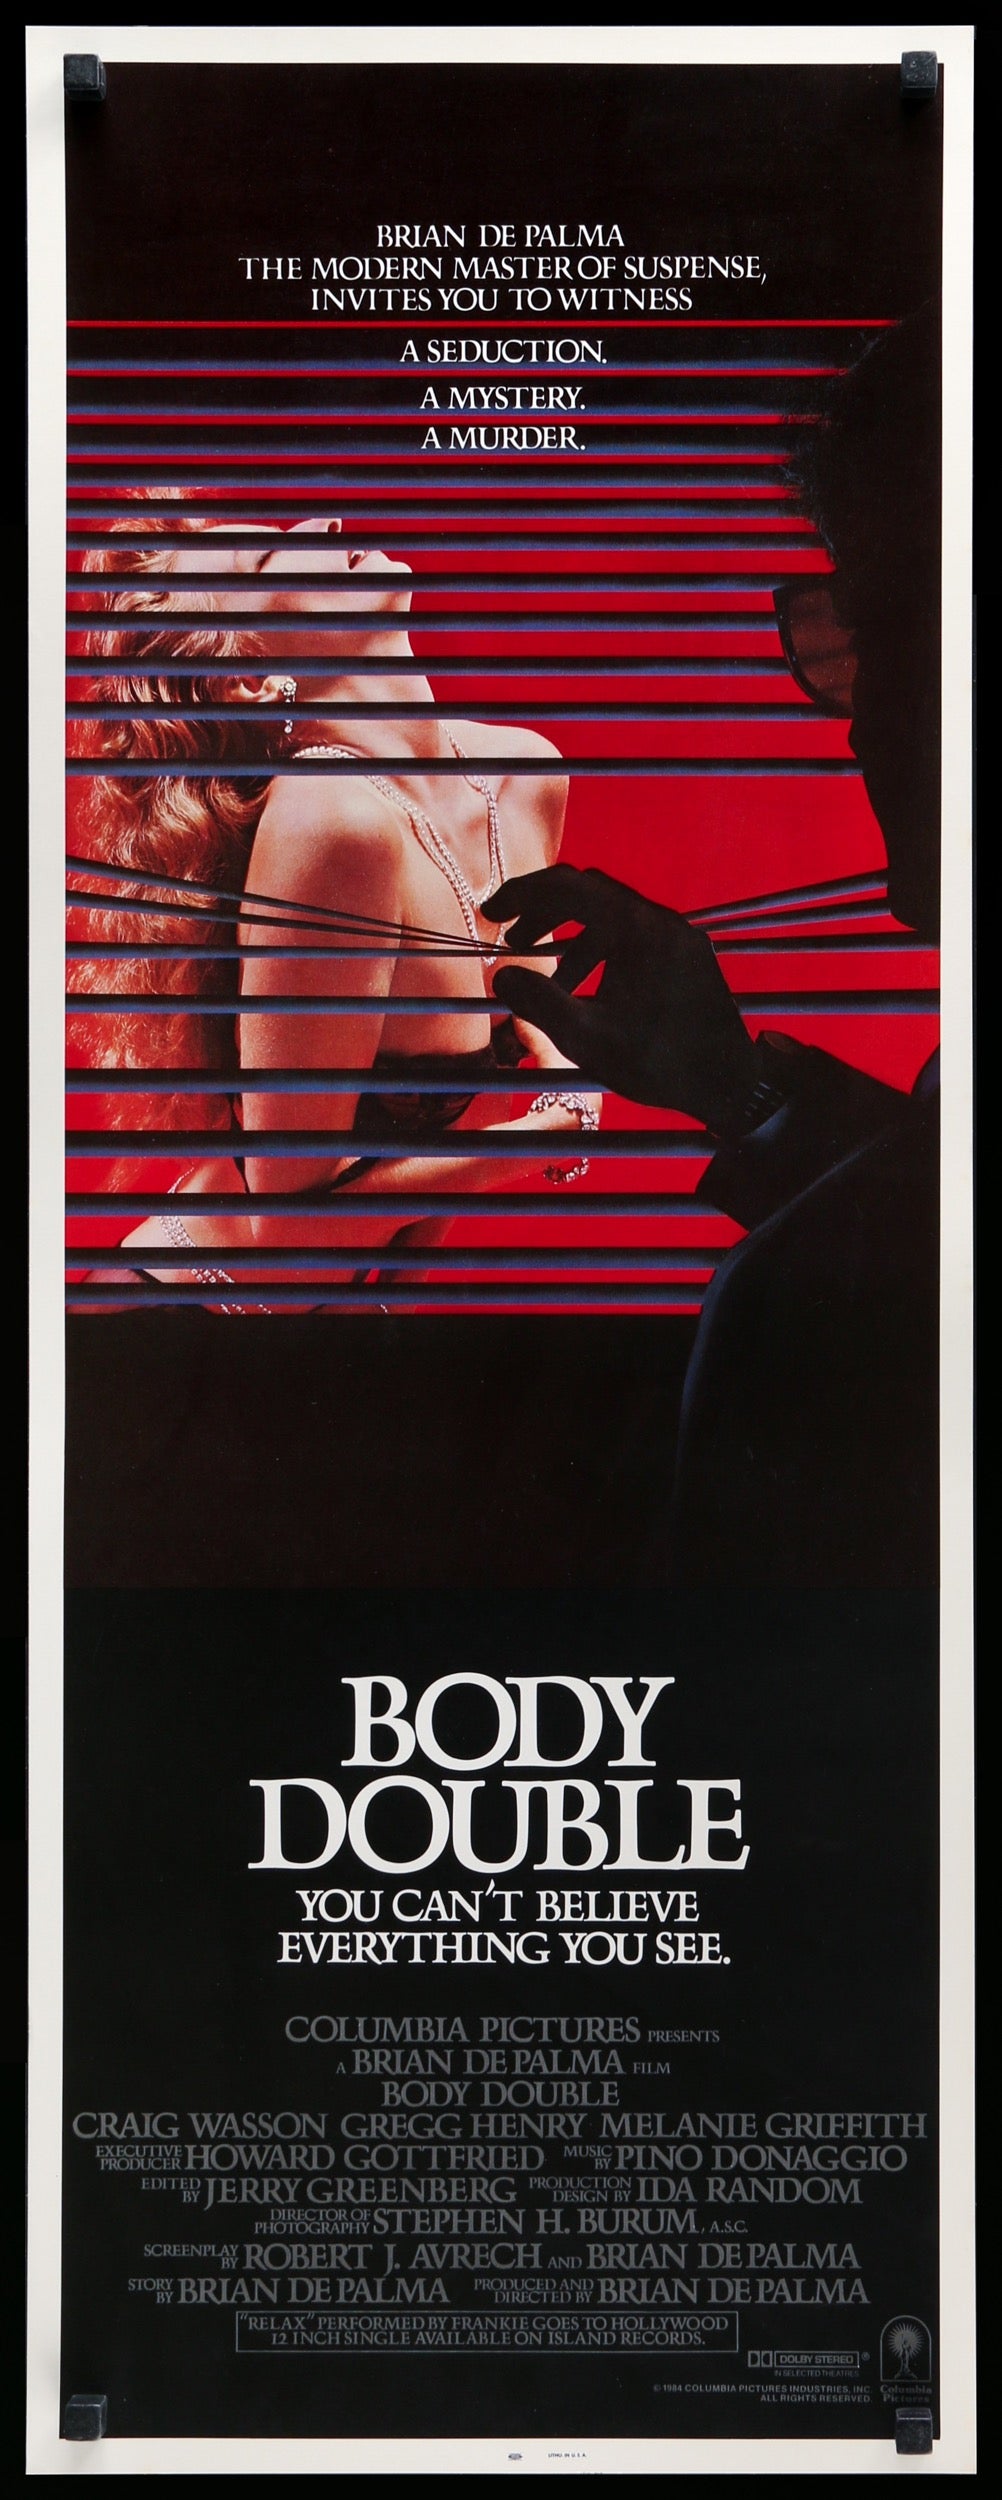 Body Double (1984) original movie poster for sale at Original Film Art